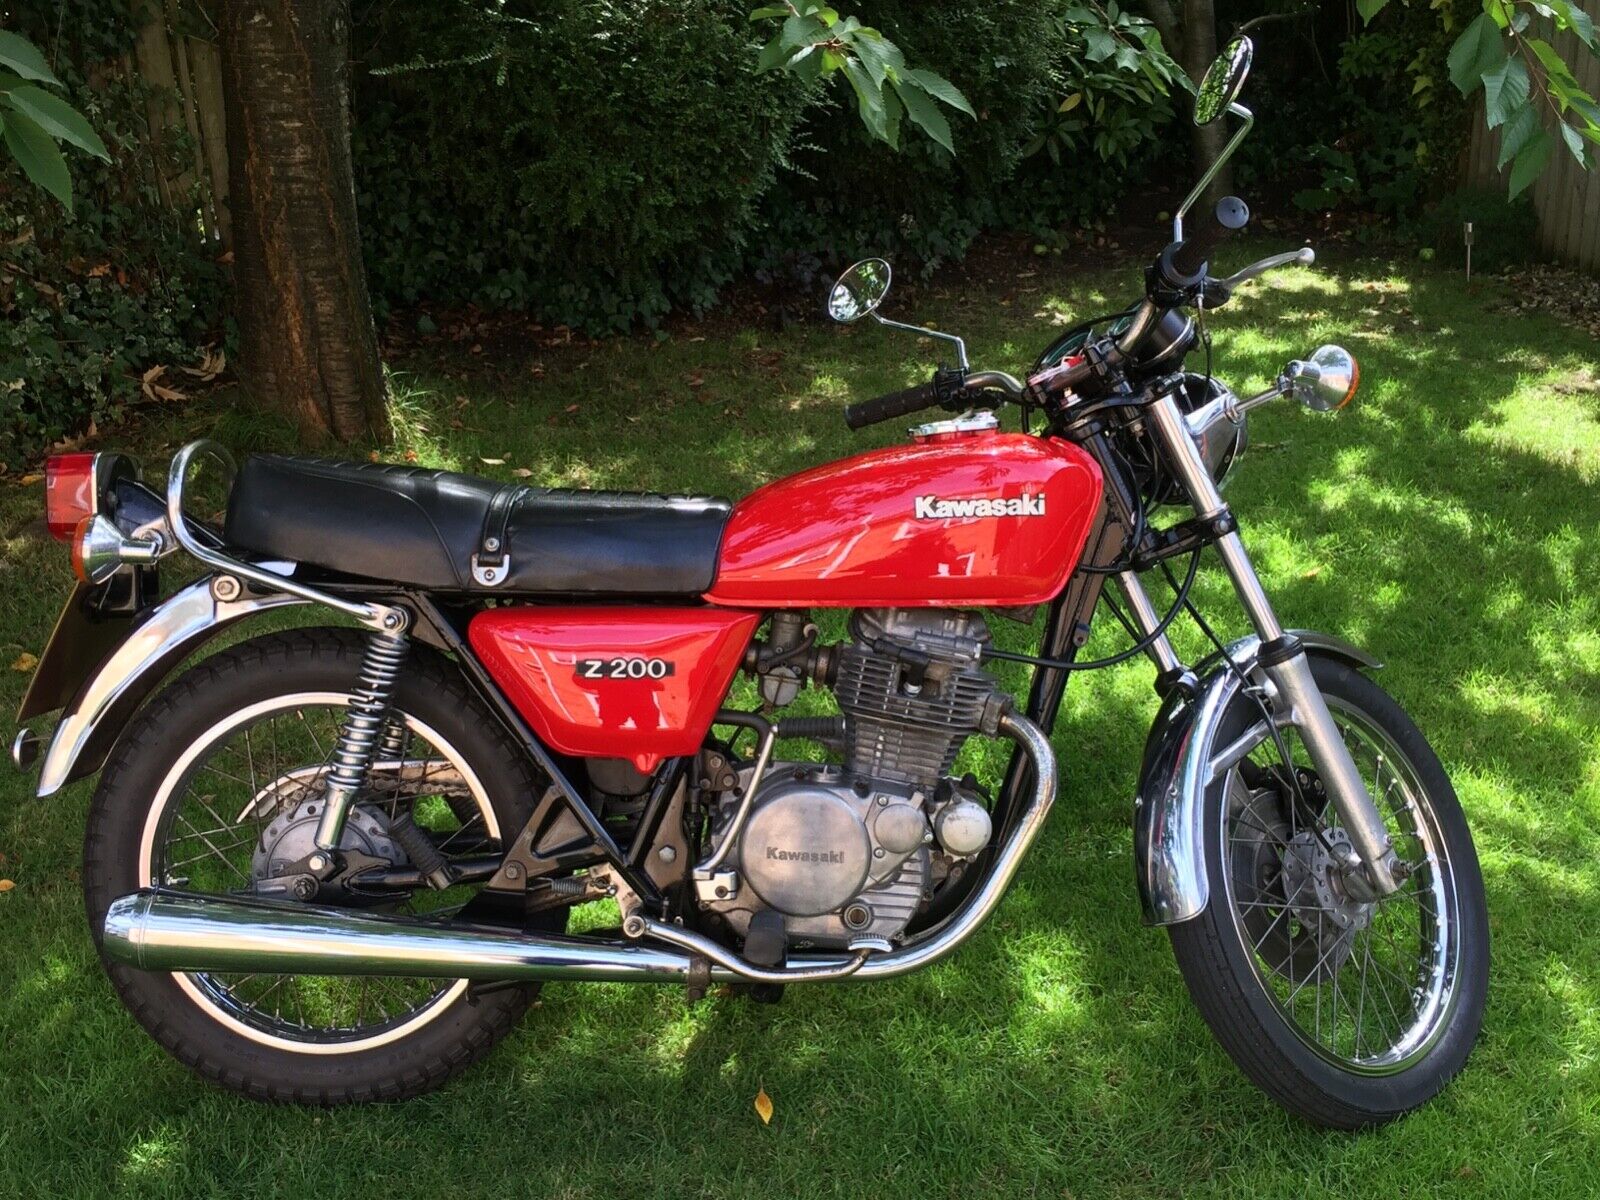 Kawasaki Z200 Motorbike - 1981 - Red - Picture 1 of 5